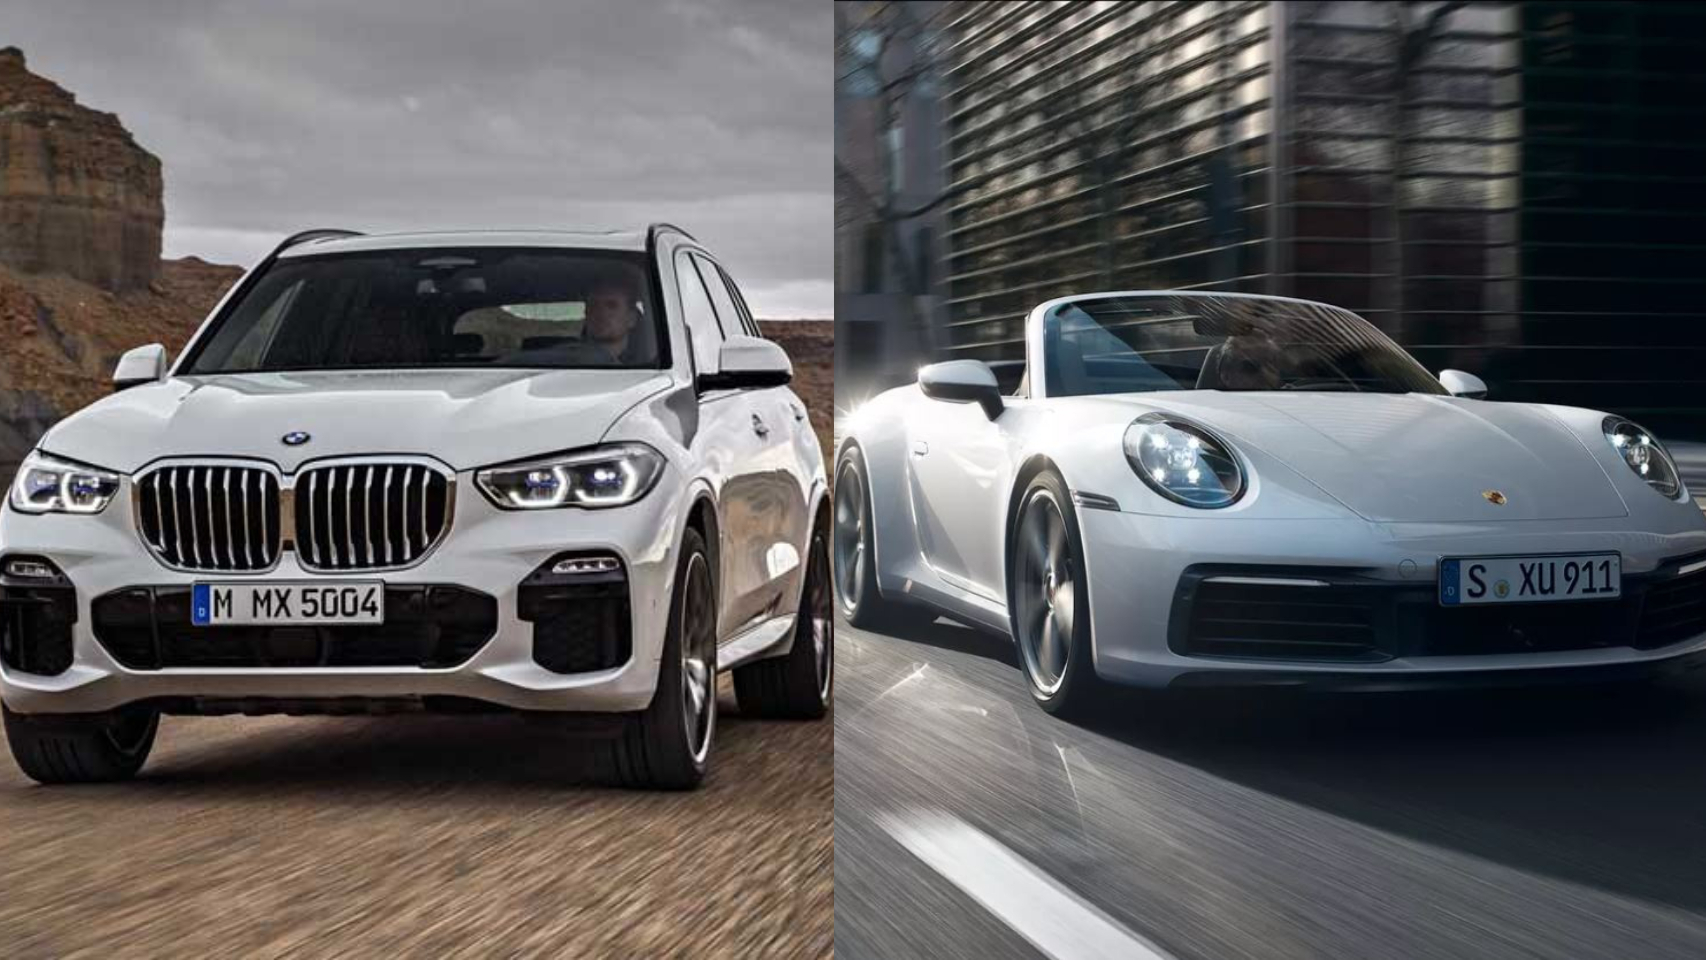 A la izquierda, BMW X5; a la derecha, Porsche 911